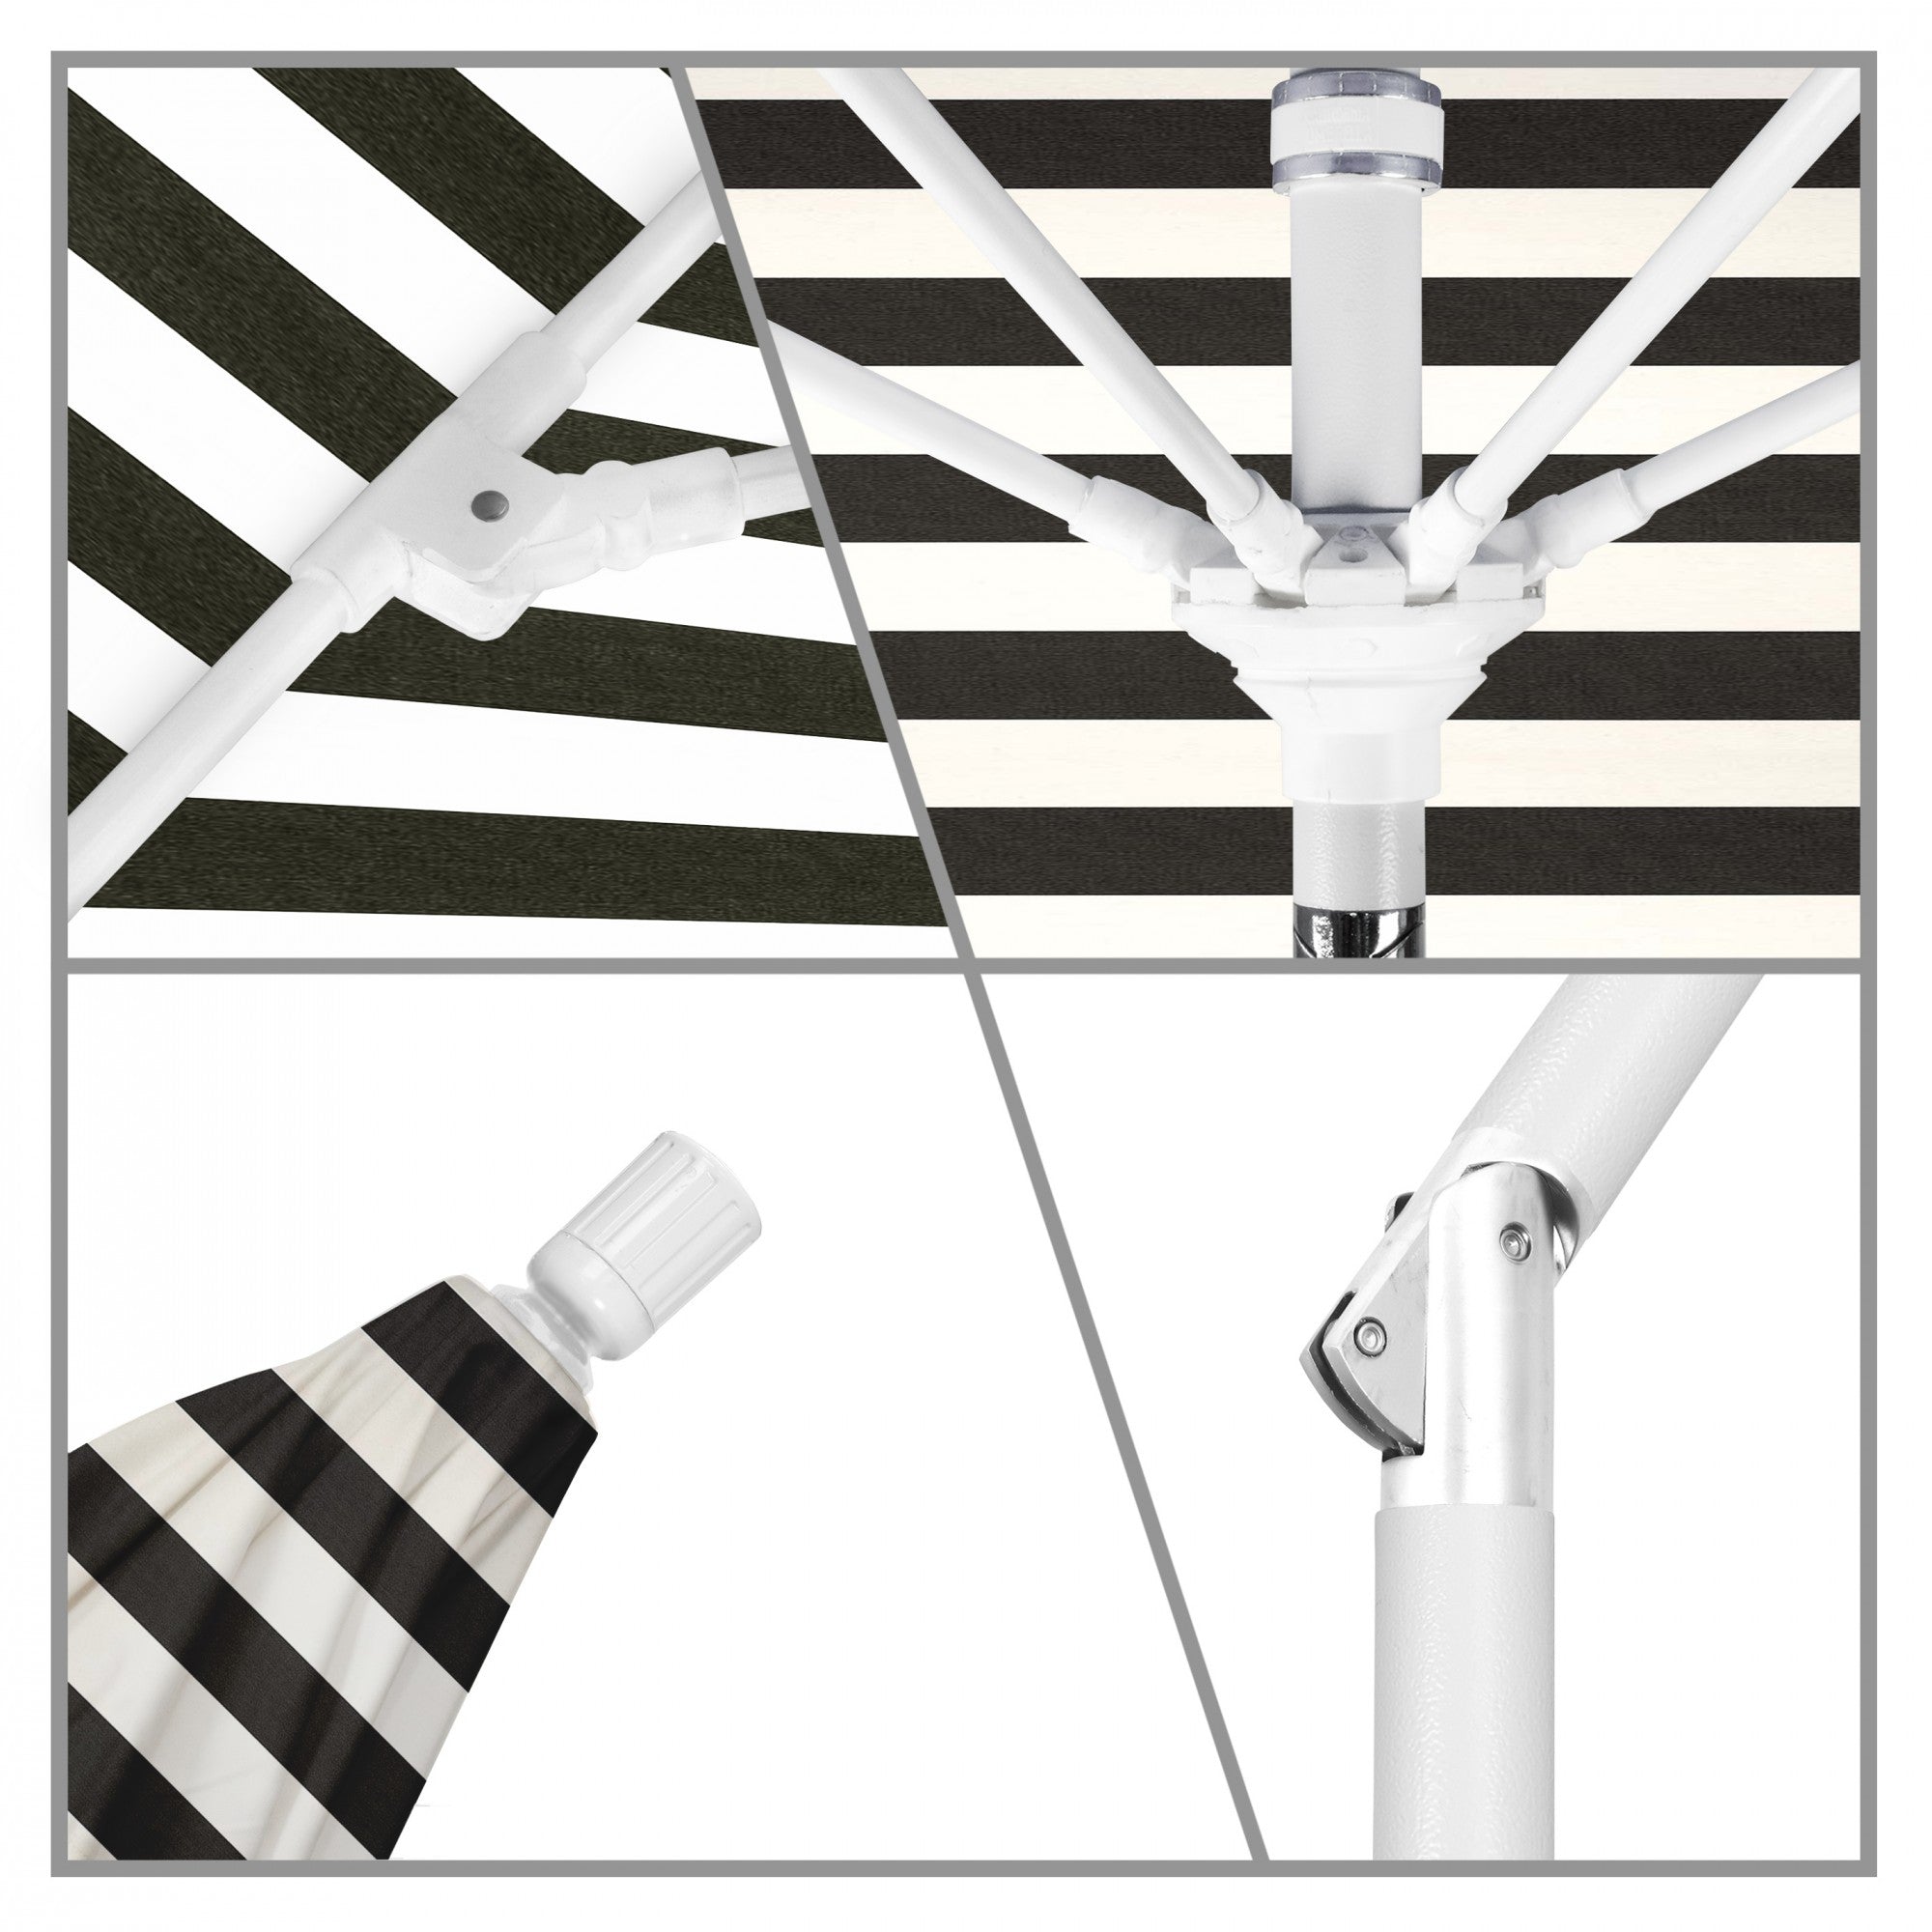 California Umbrella - 9' - Patio Umbrella Umbrella - Aluminum Pole - Cabana Classic - Sunbrella  - GSCUF908170-58030